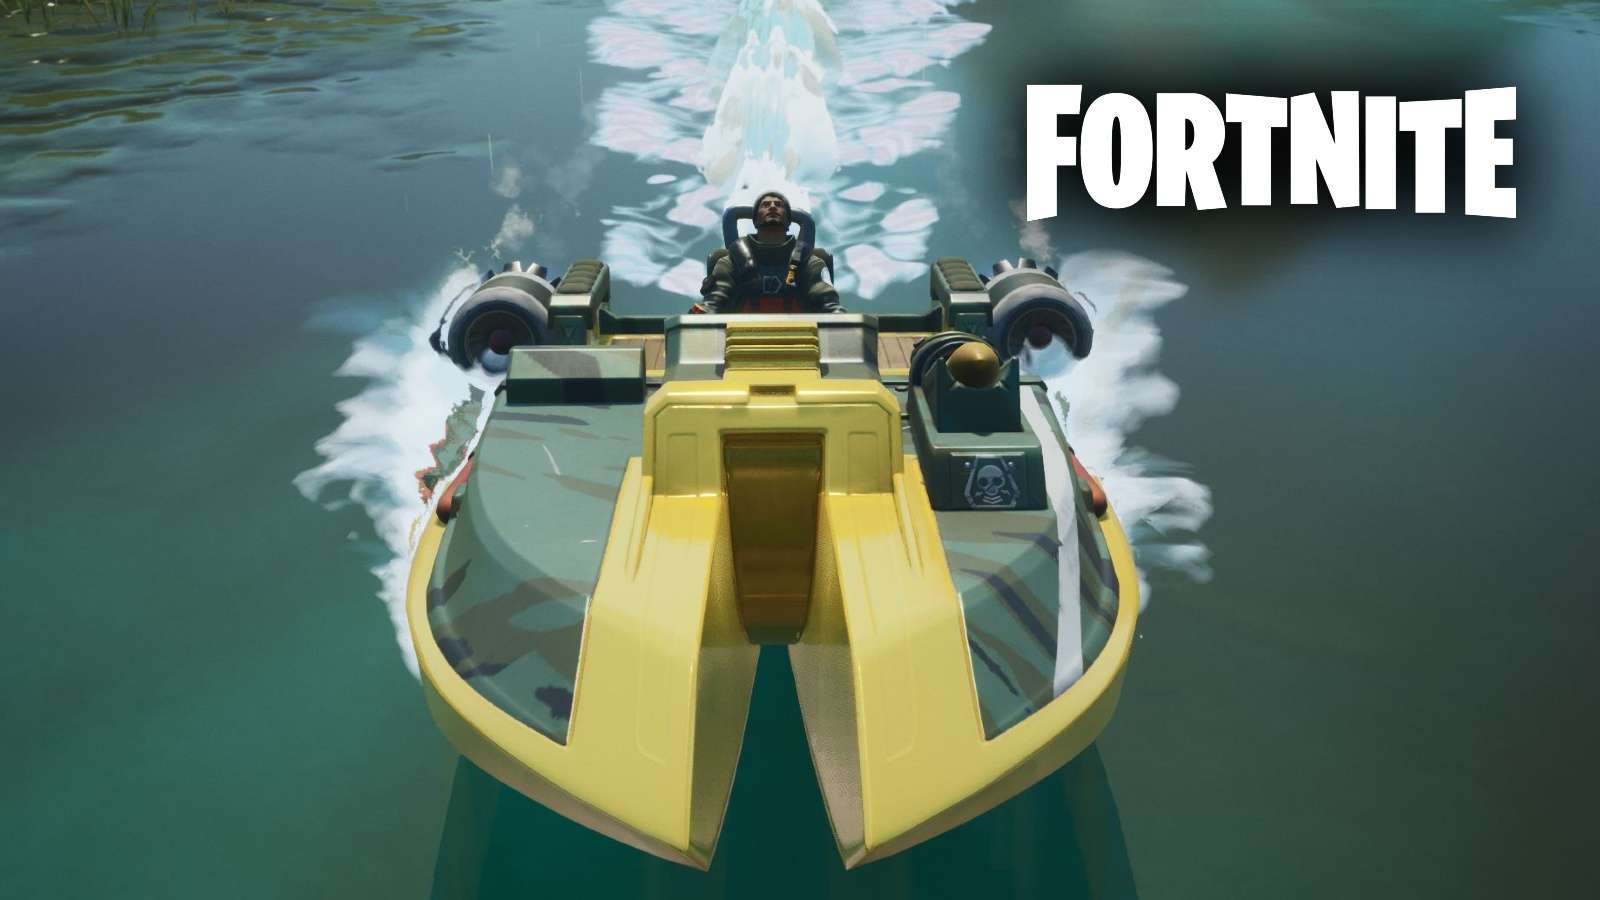 Fortnite logo with gold motorboat